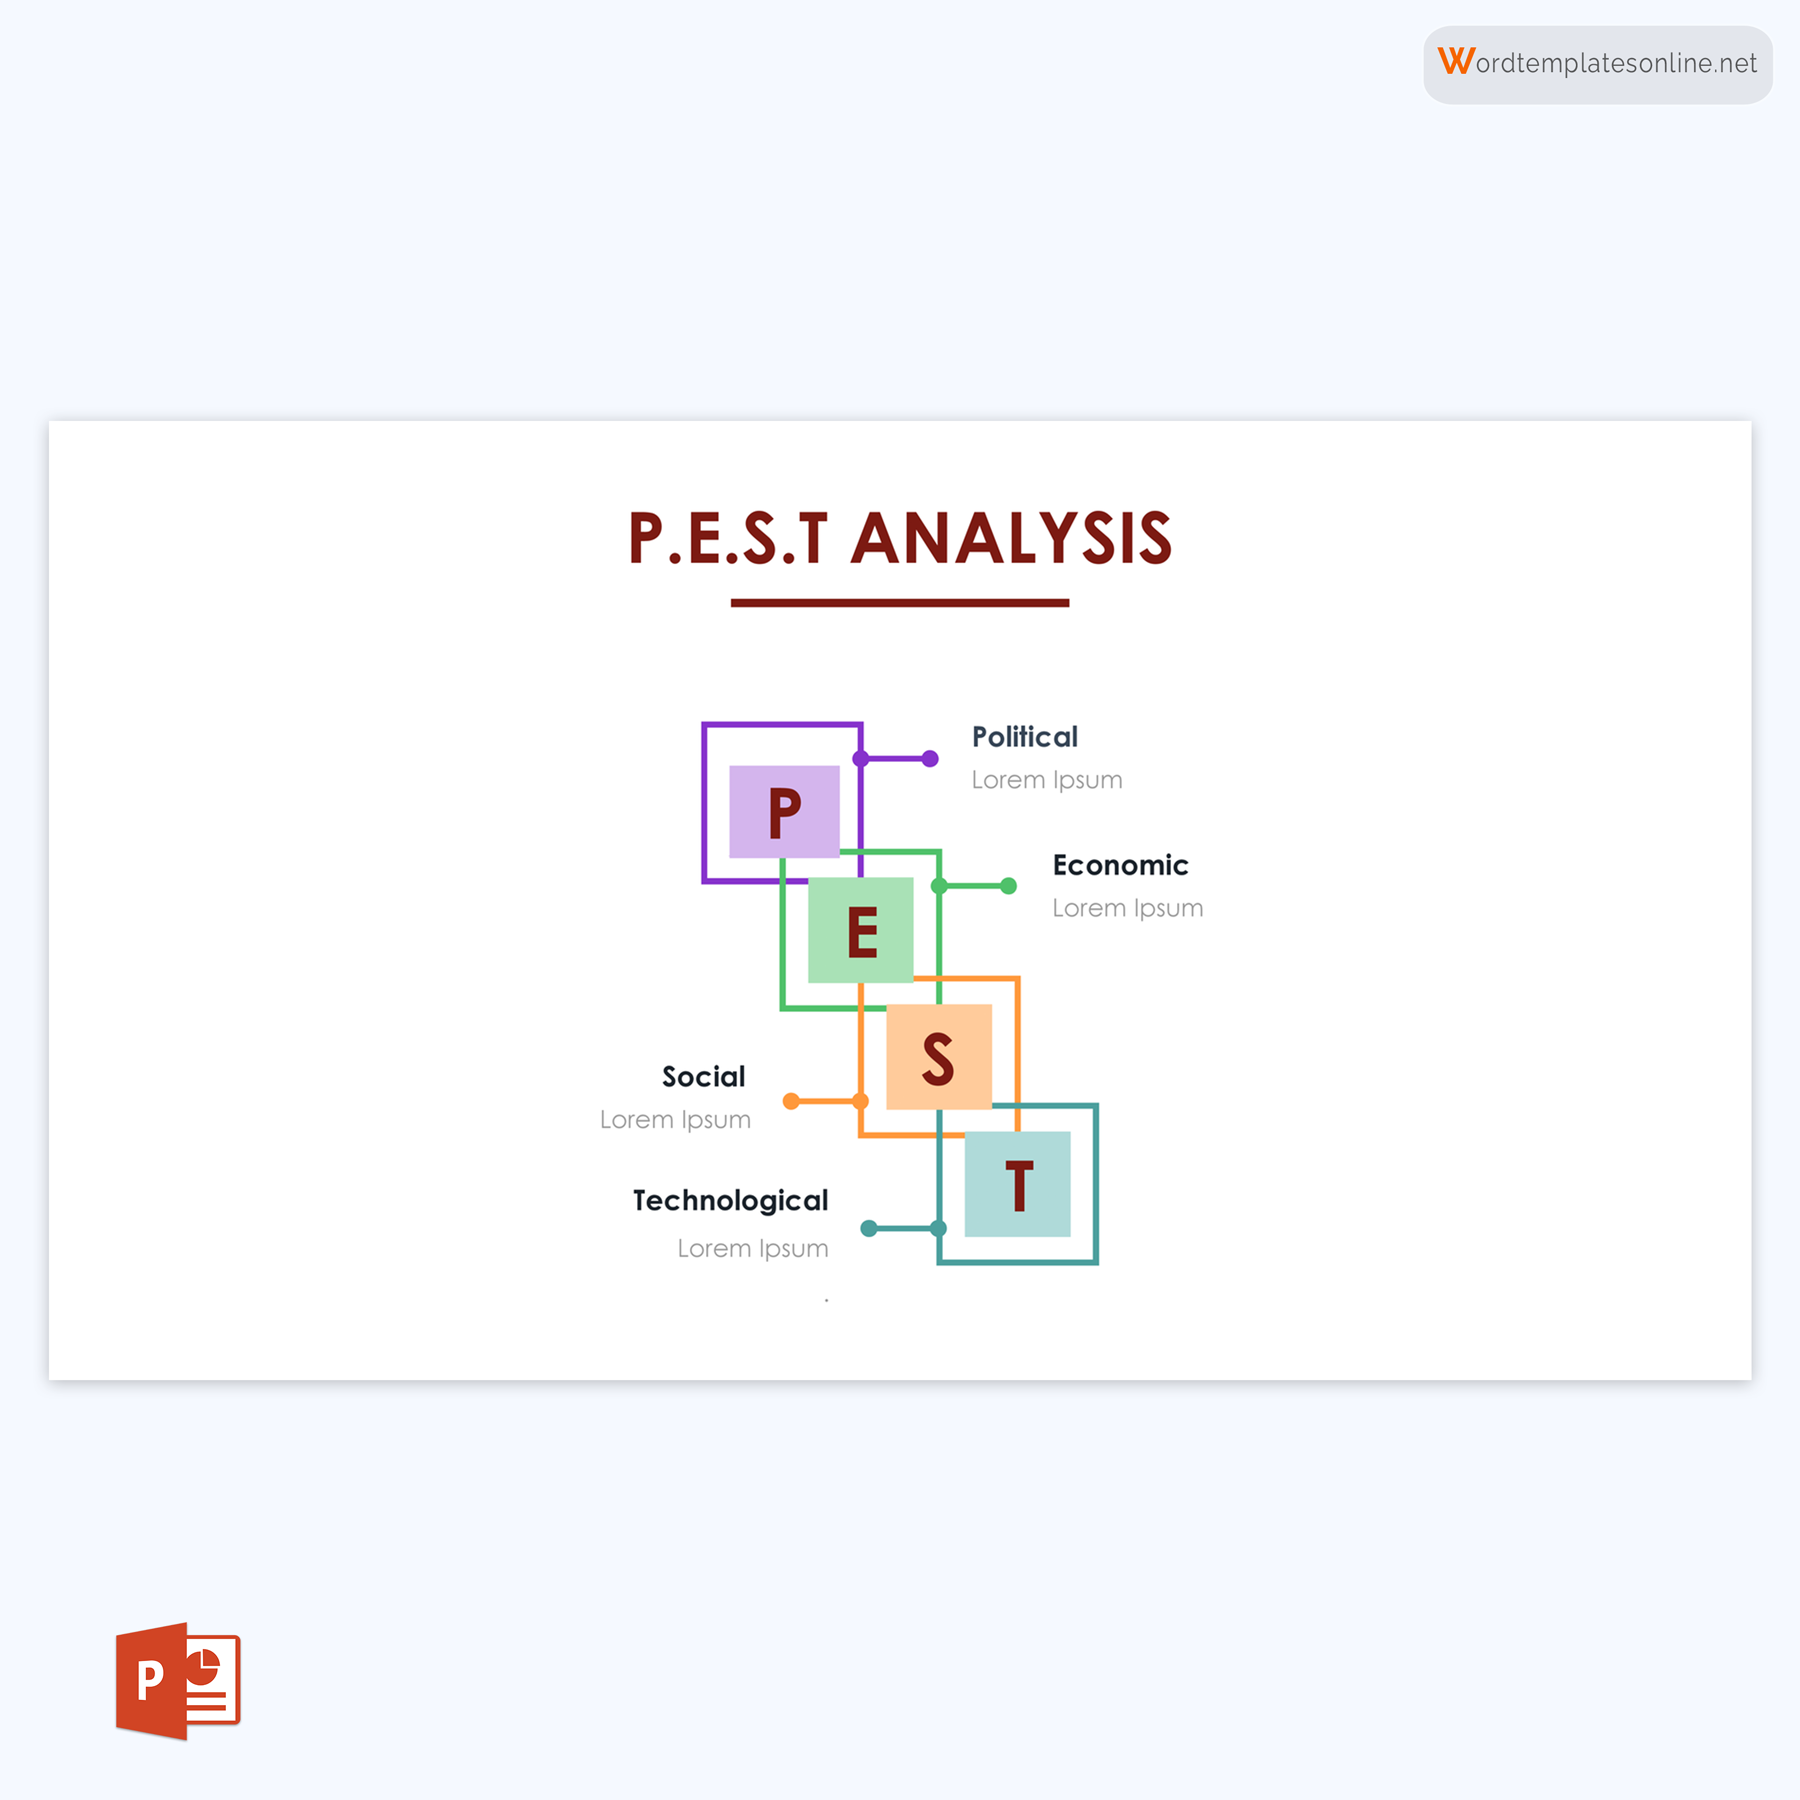 PEST Analysis Example in PowerPoint - Sample Slide